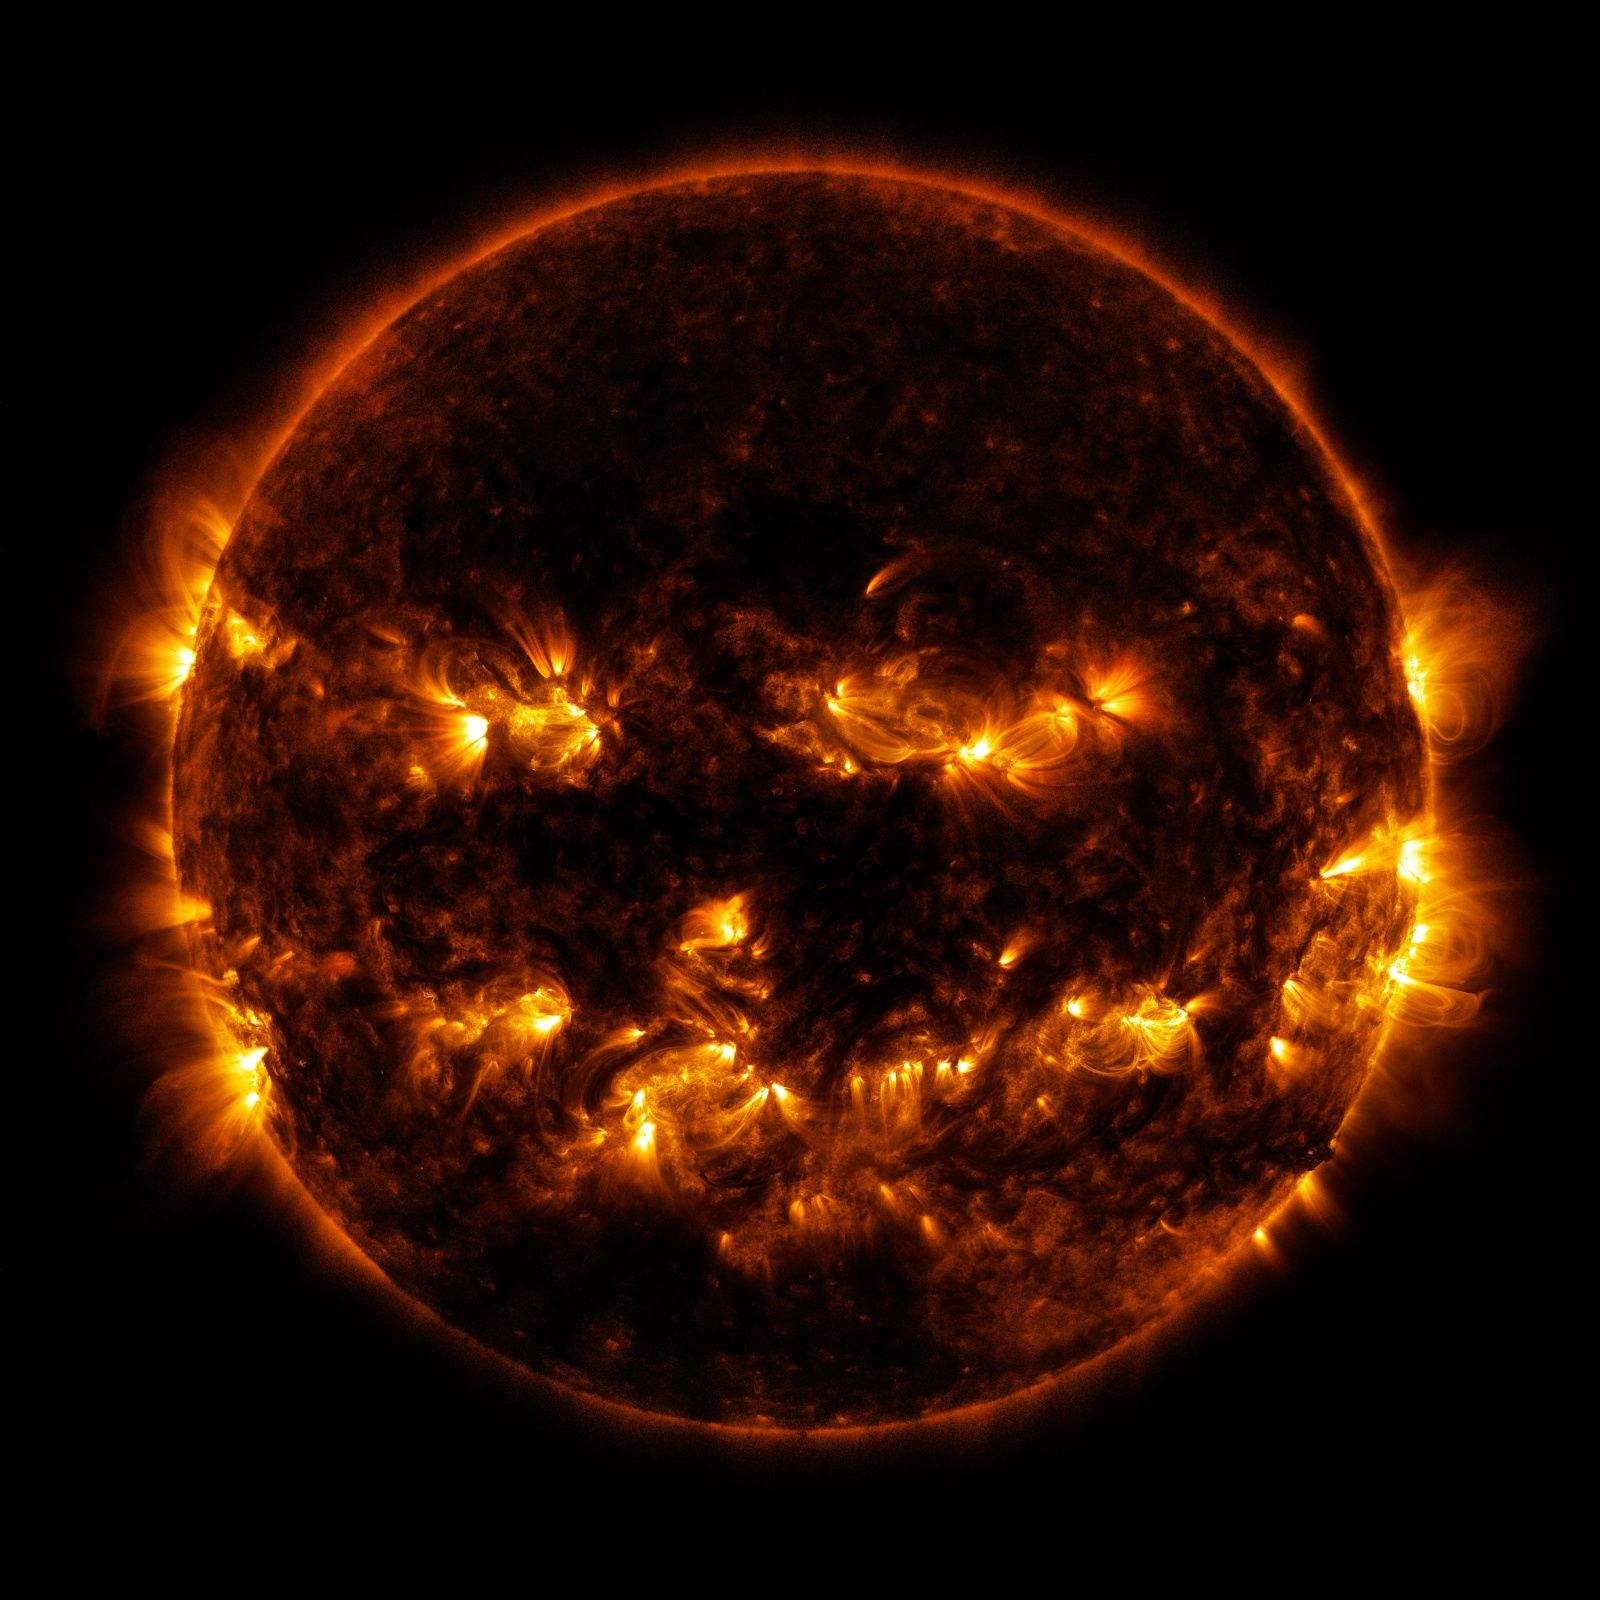 NASA captures Halloween cheer with jack-o'-lantern sun | Cult of Mac